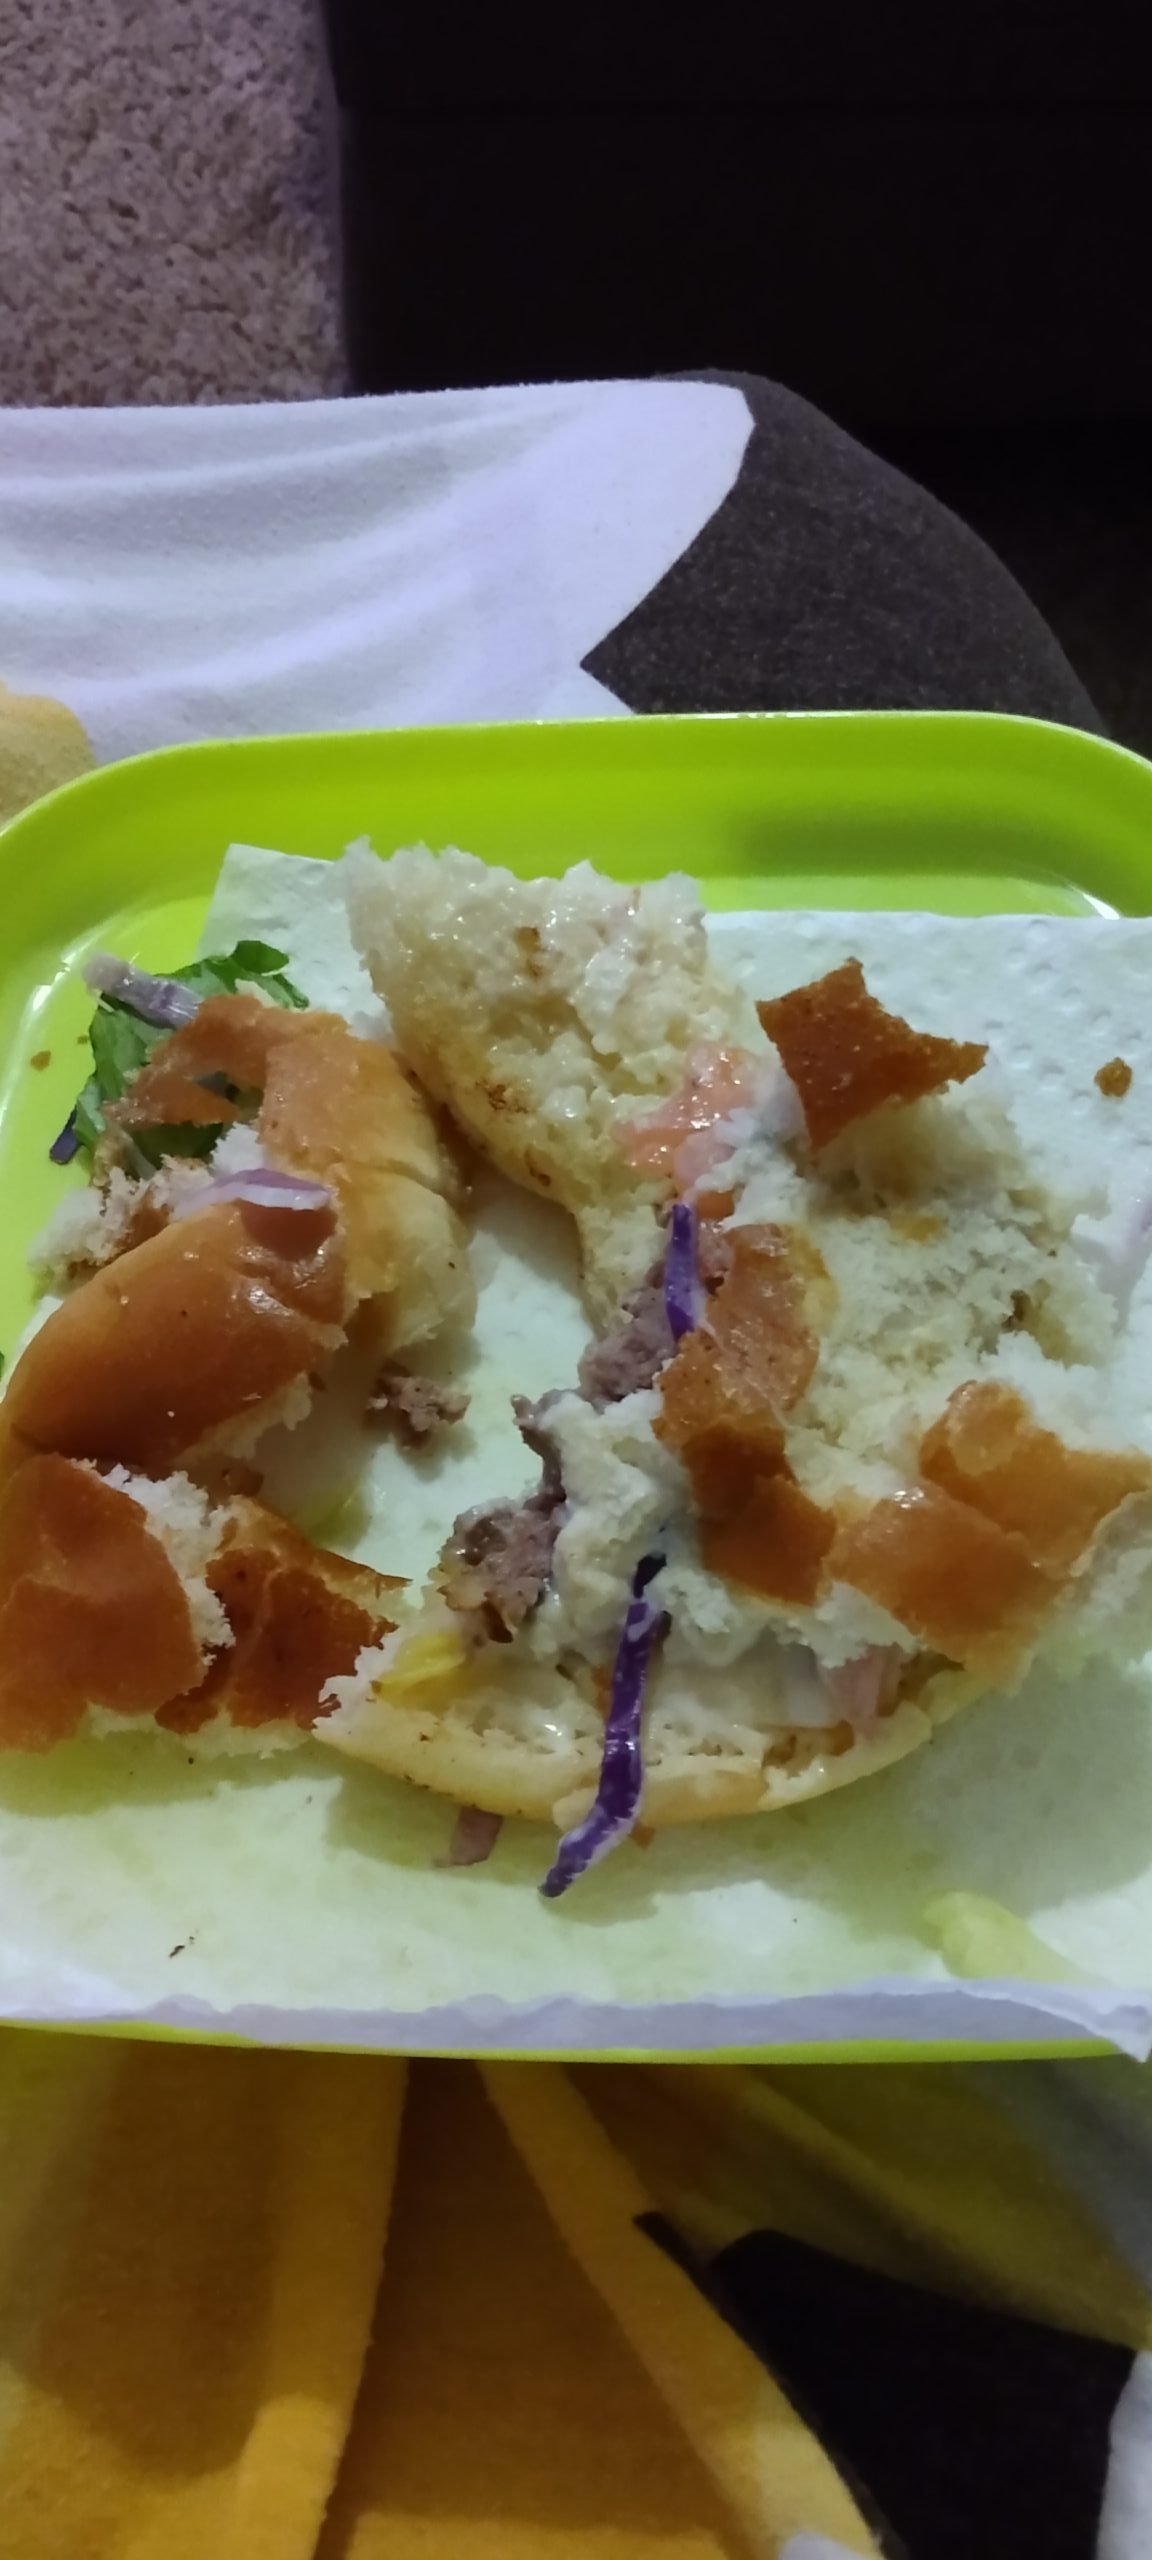 Sunbeam Bread complaint Hamburger buns fell apart